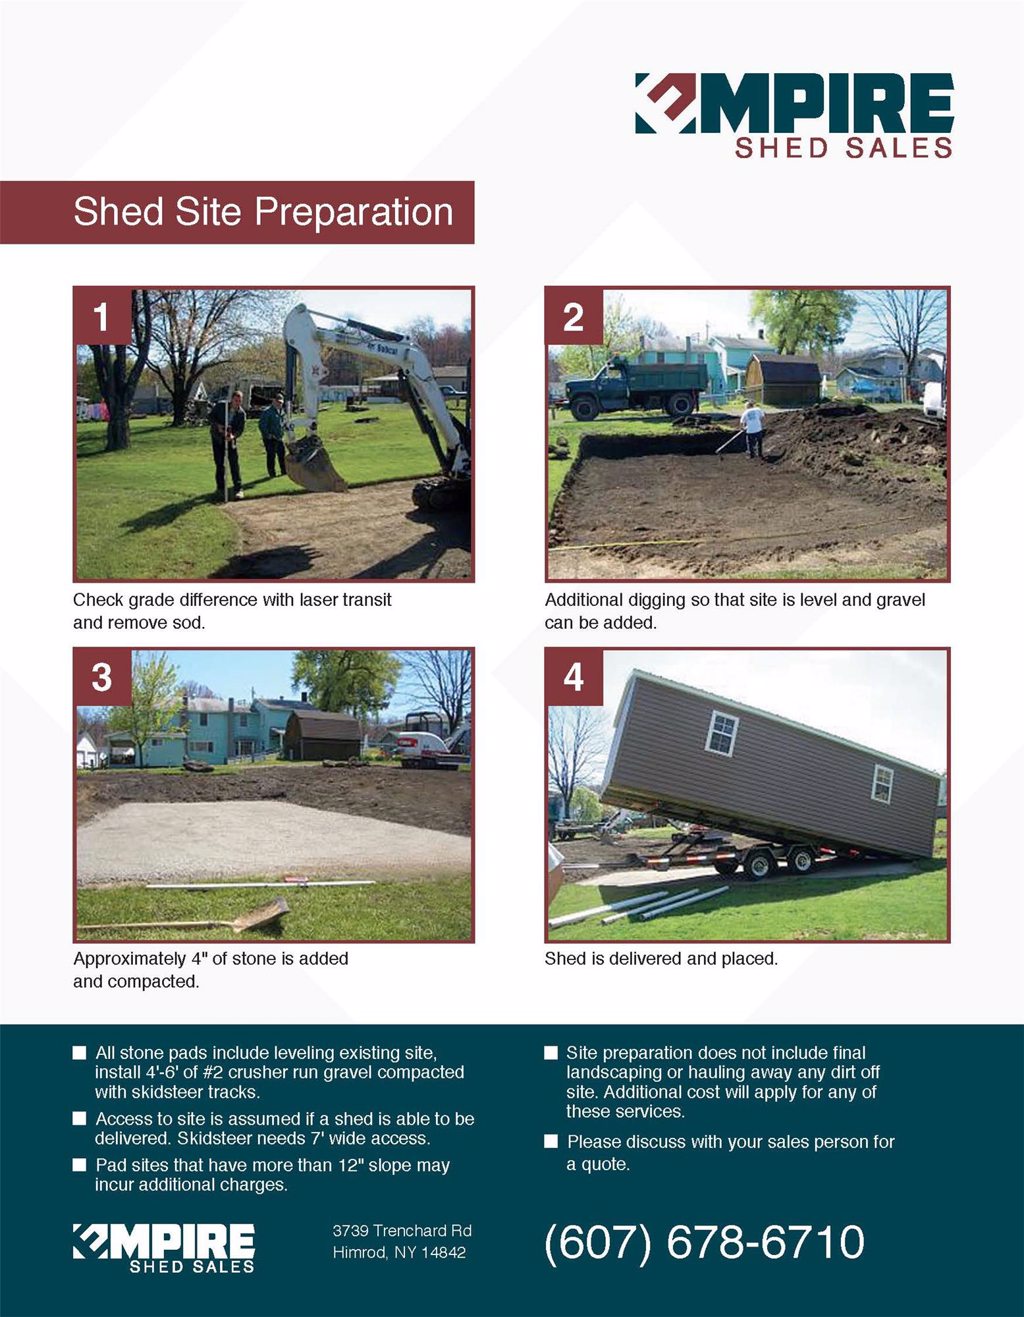 Instructions for proper site preparation for backyard sheds